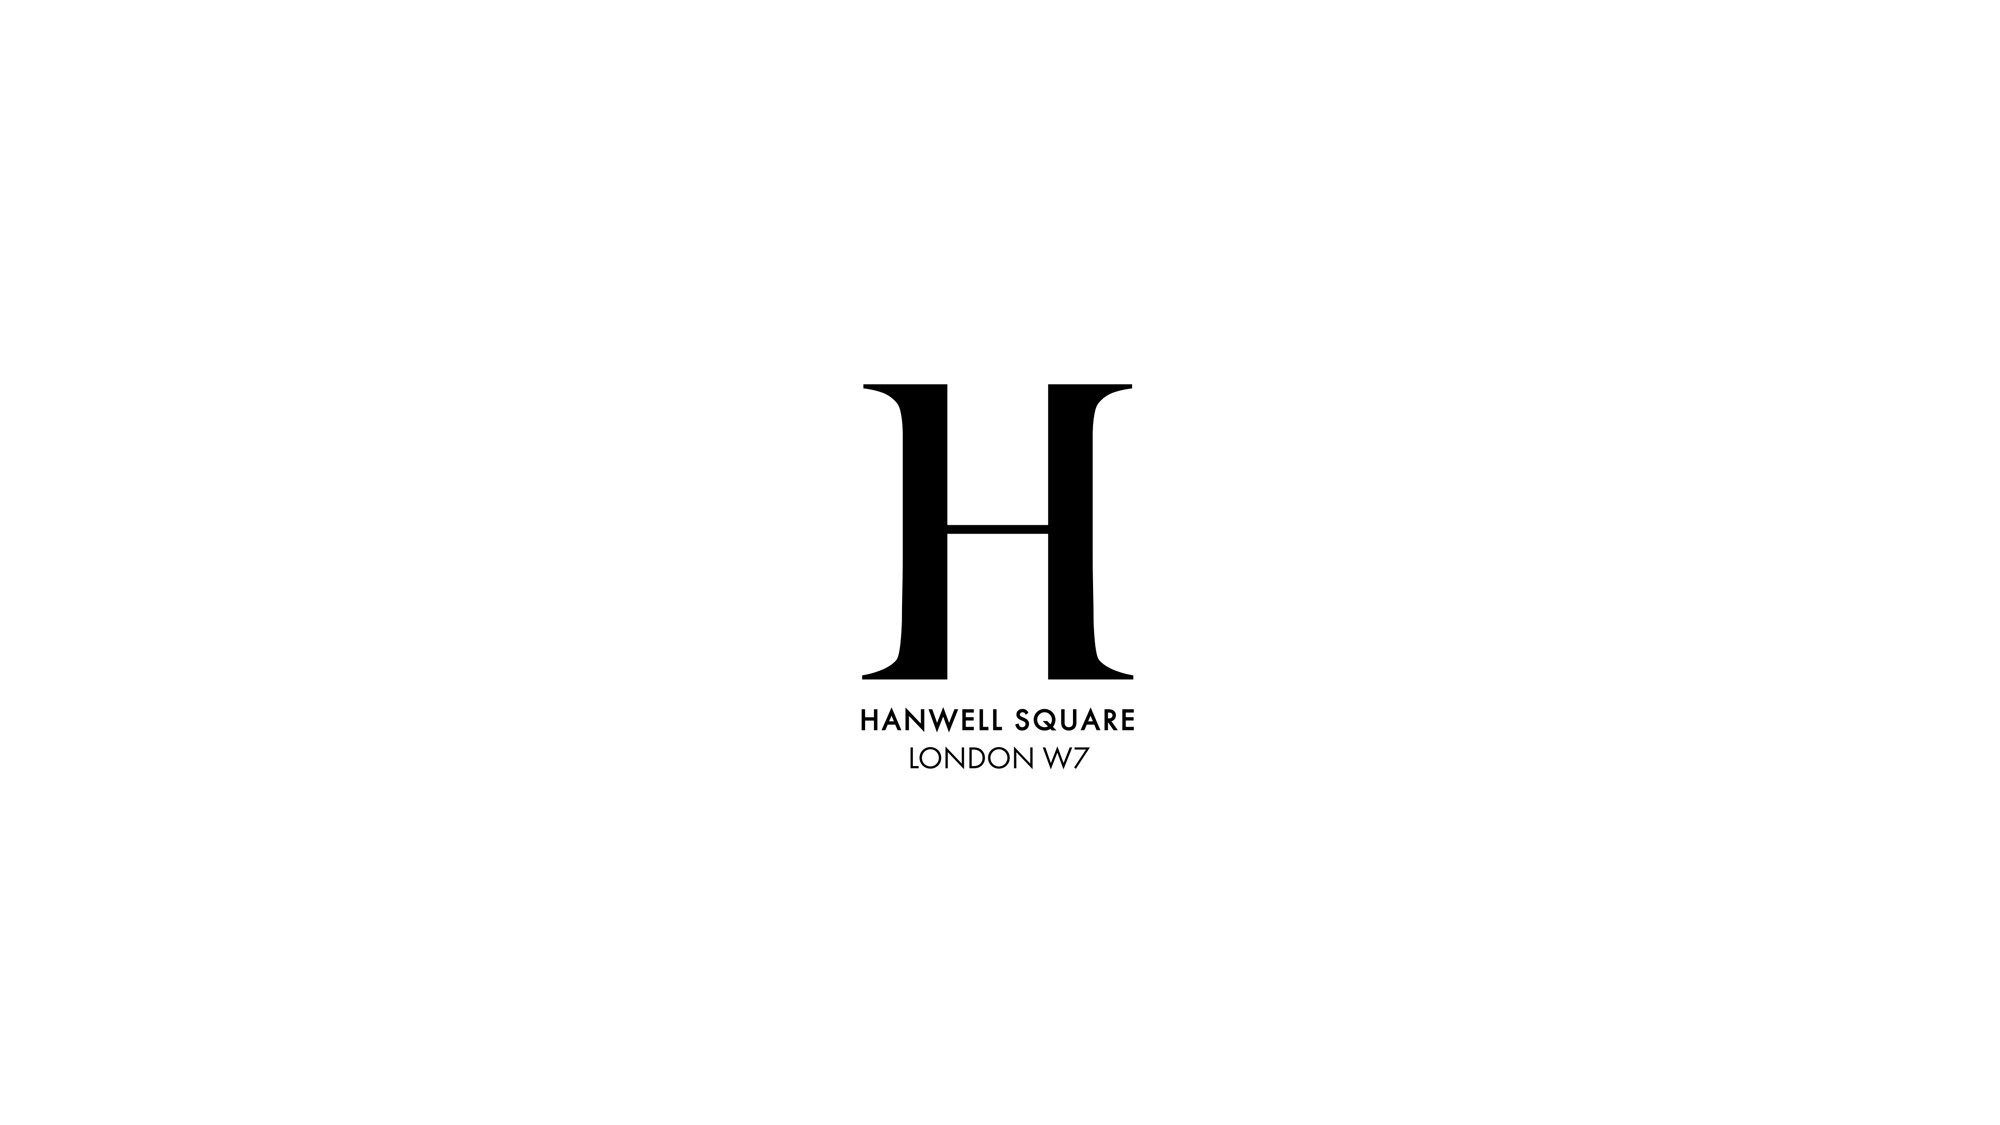 Hanwell Square development logo.